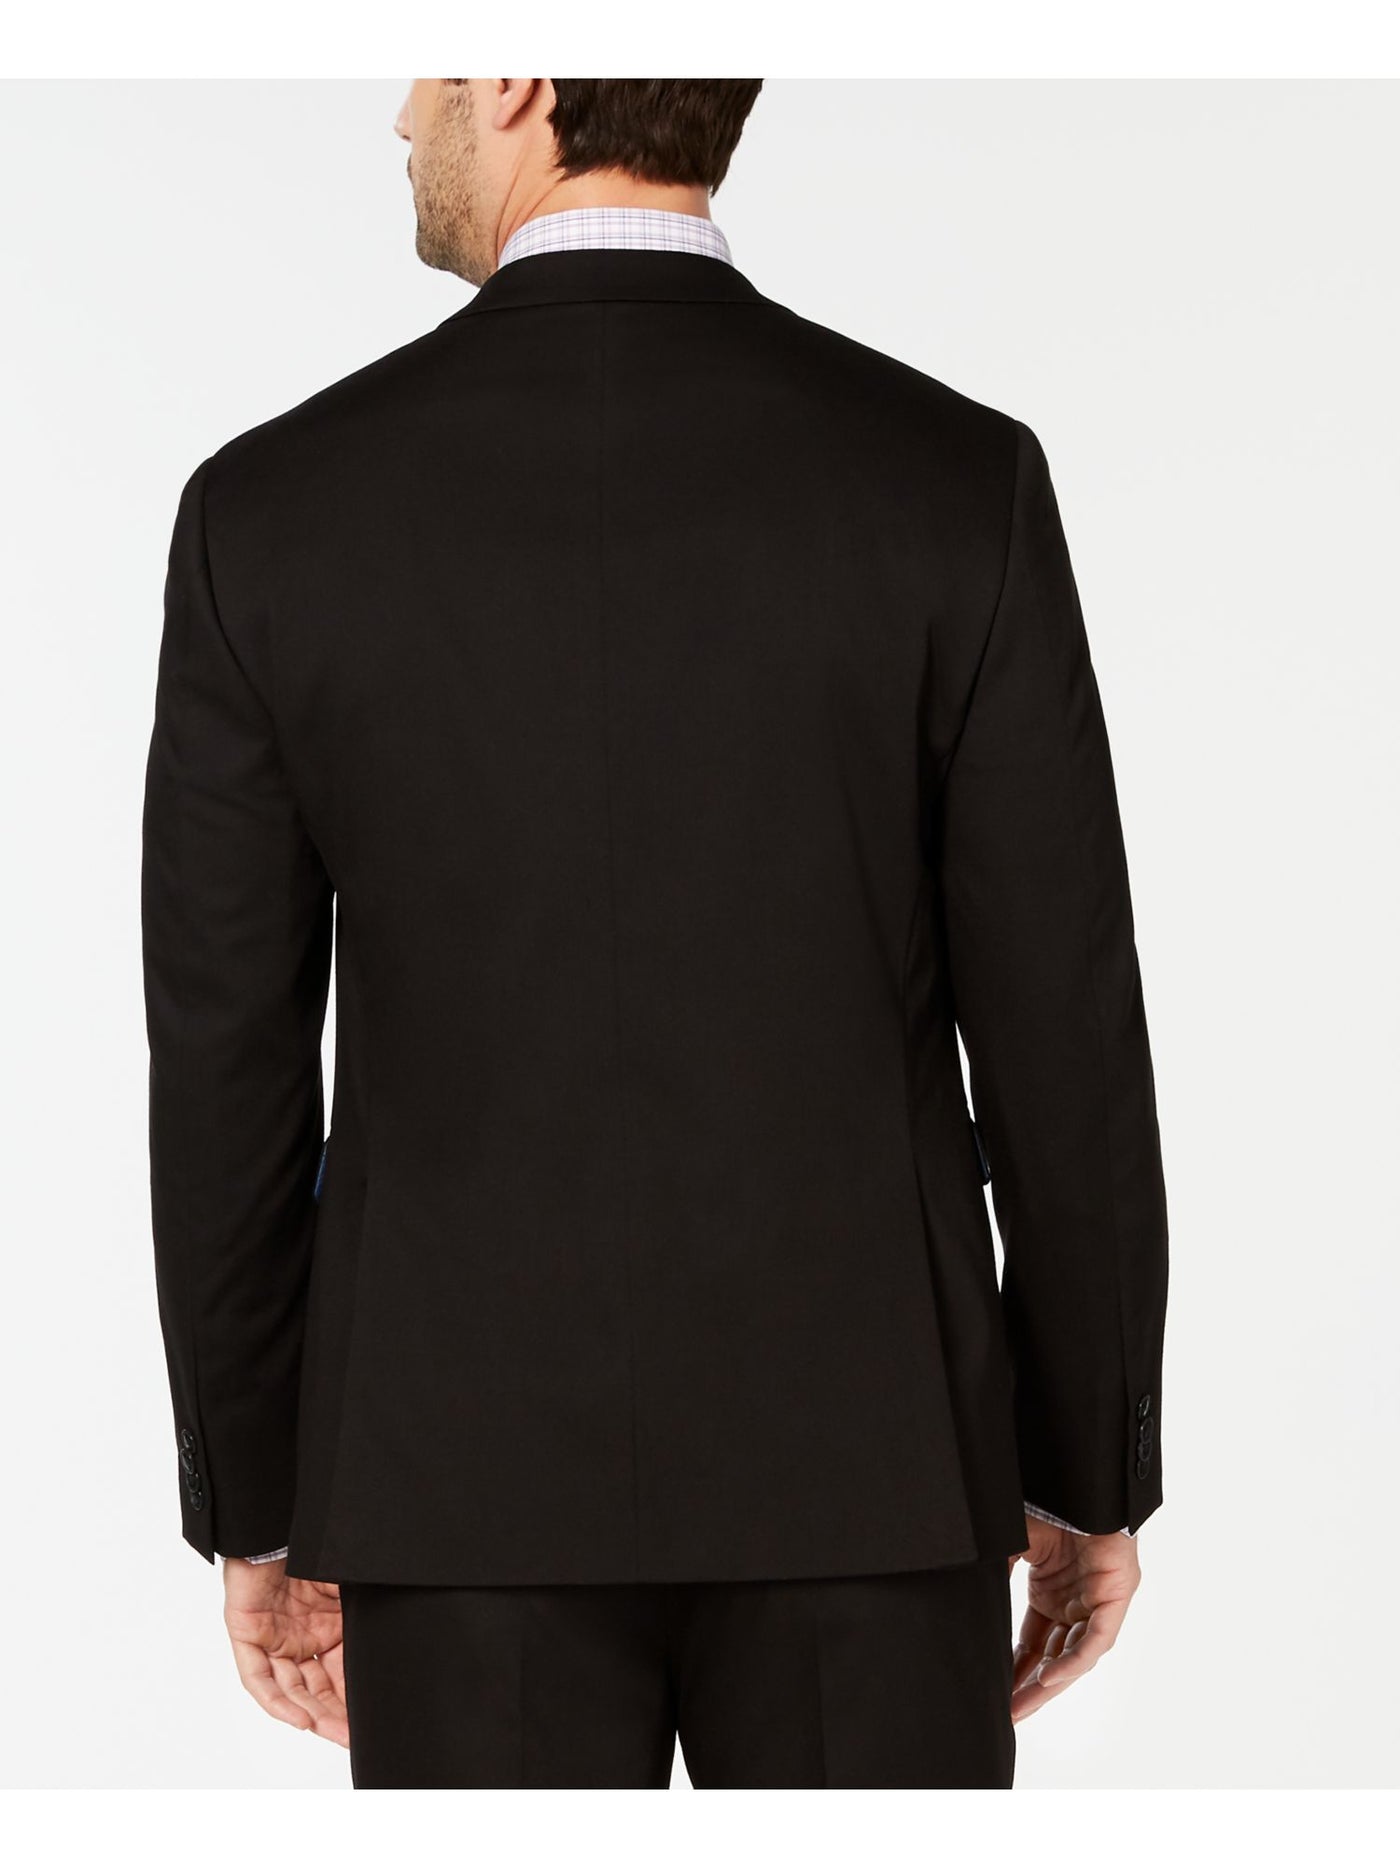 VINCE CAMUTO Mens Black Single Breasted, Stretch, Slim Fit Wrinkle Resistant Suit Separate Blazer Jacket 44L